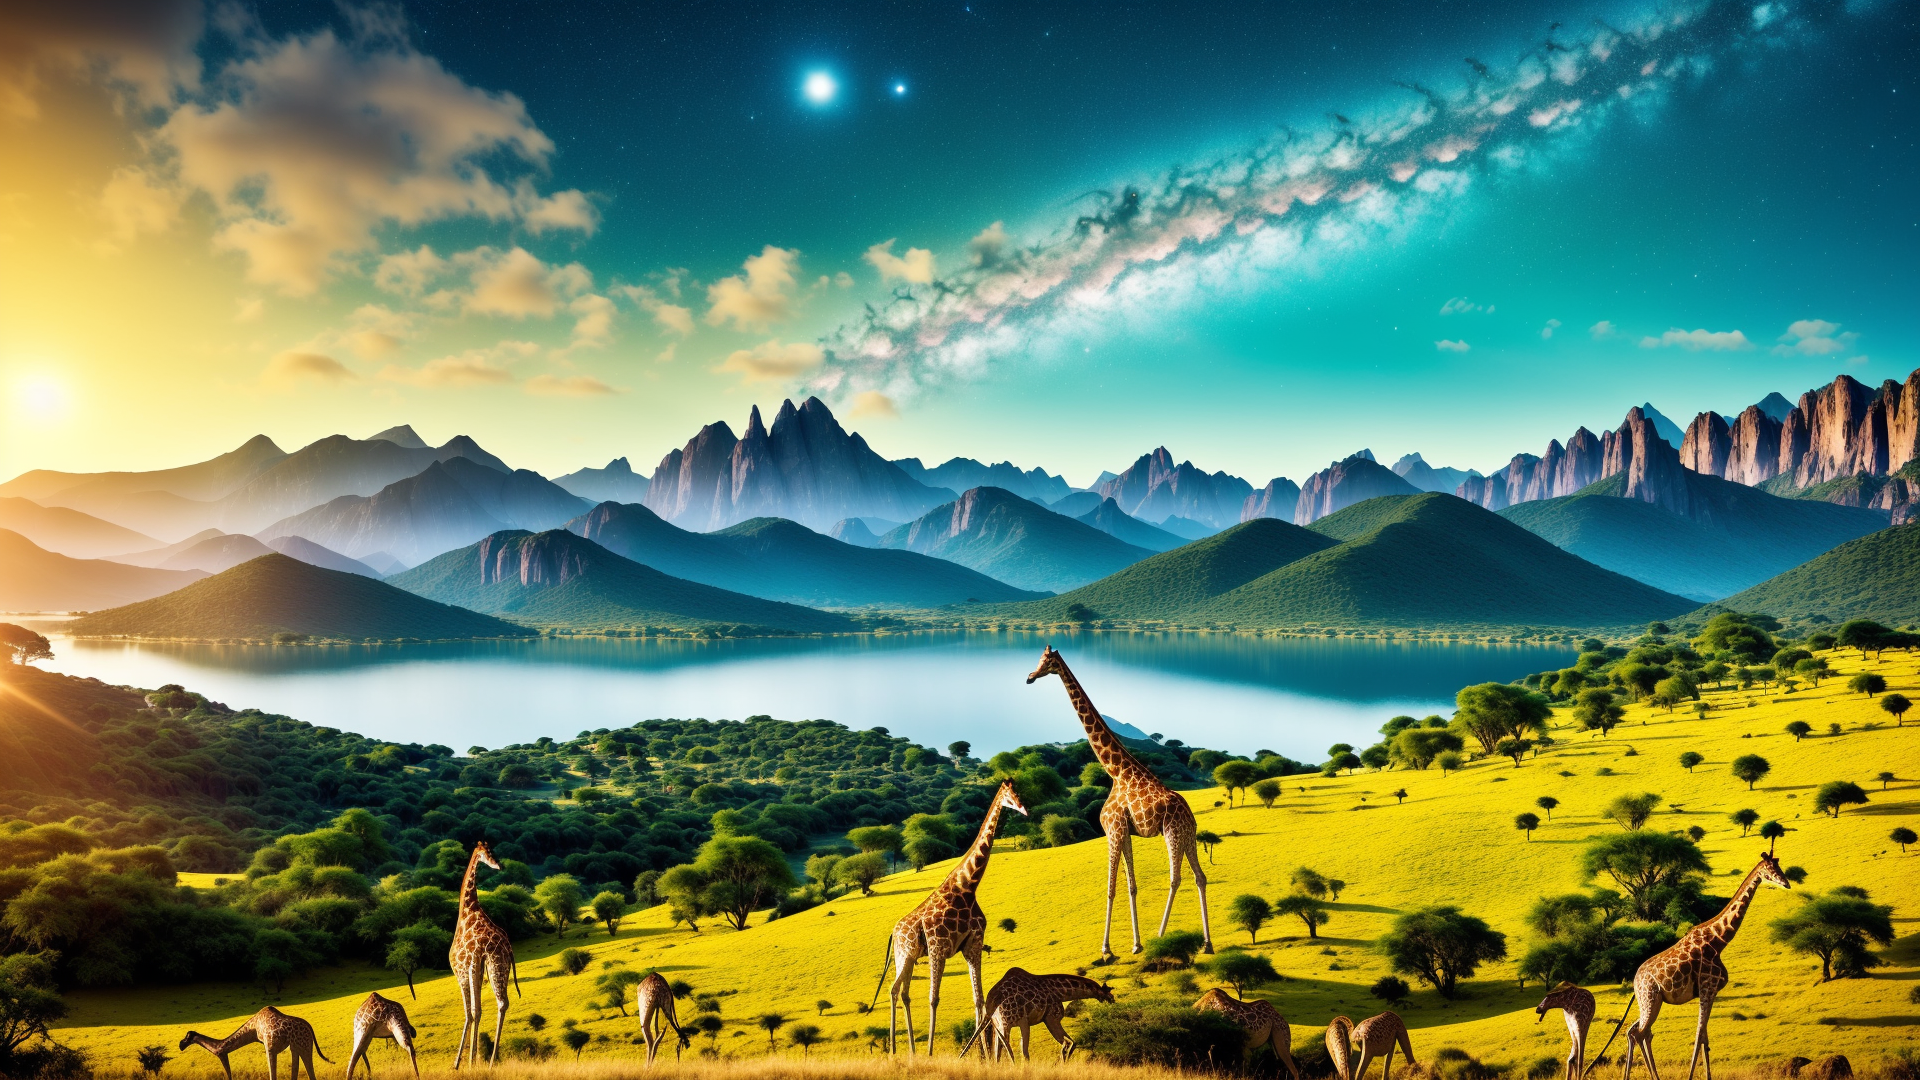 Ai Art Digital Art Giraffes Landscape Lake Mountains Galaxy Sky Clouds Animals Nature 1920x1080